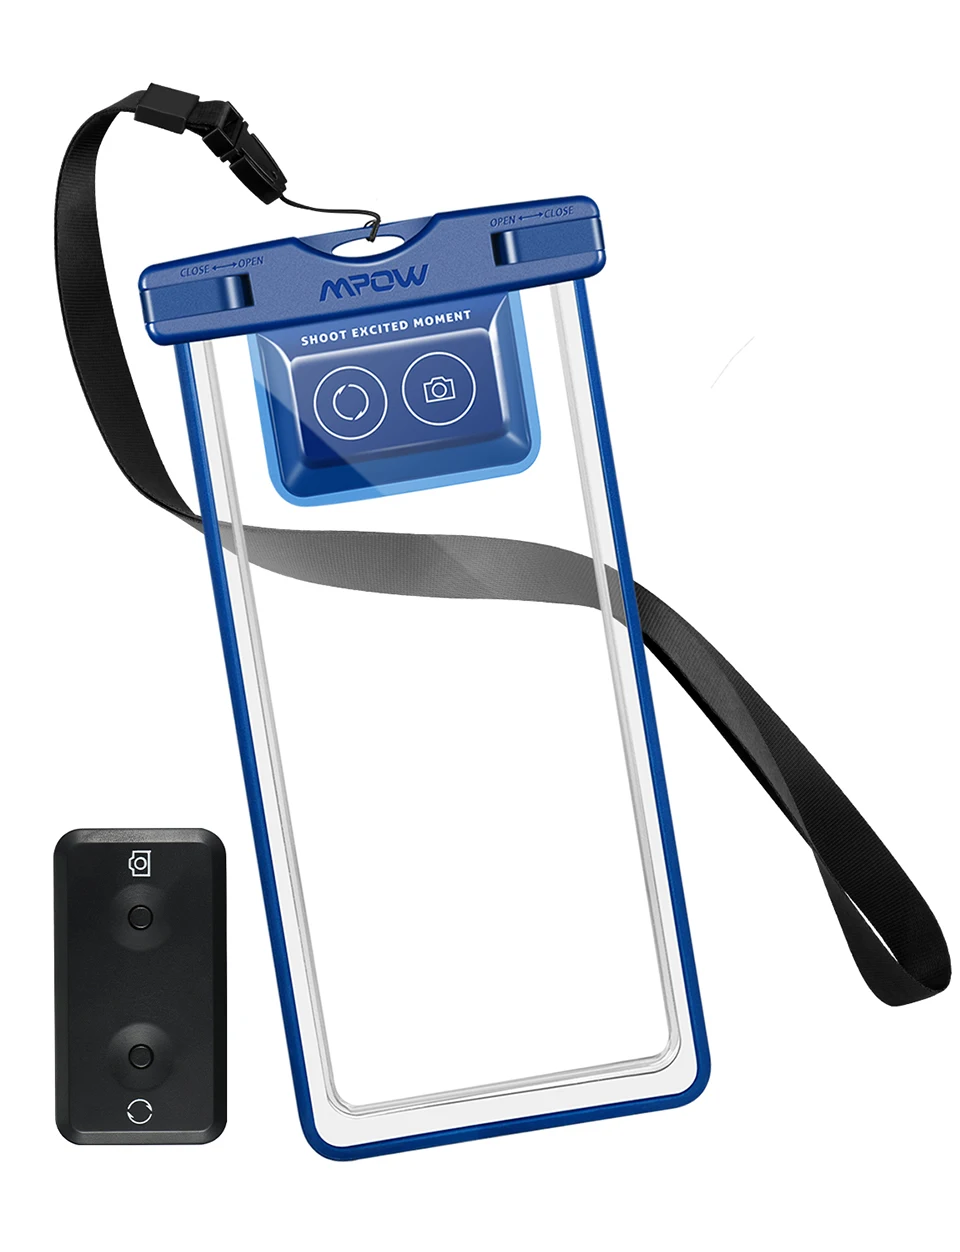 Mpow Универсальный IPX8 водонепроницаемый чехол, сумка, чехол для телефона, 6,5 дюймов, сумка для телефона, чехол для Iphone XR XS X 8 7 6S huawei P20 Lite, чехол для телефона